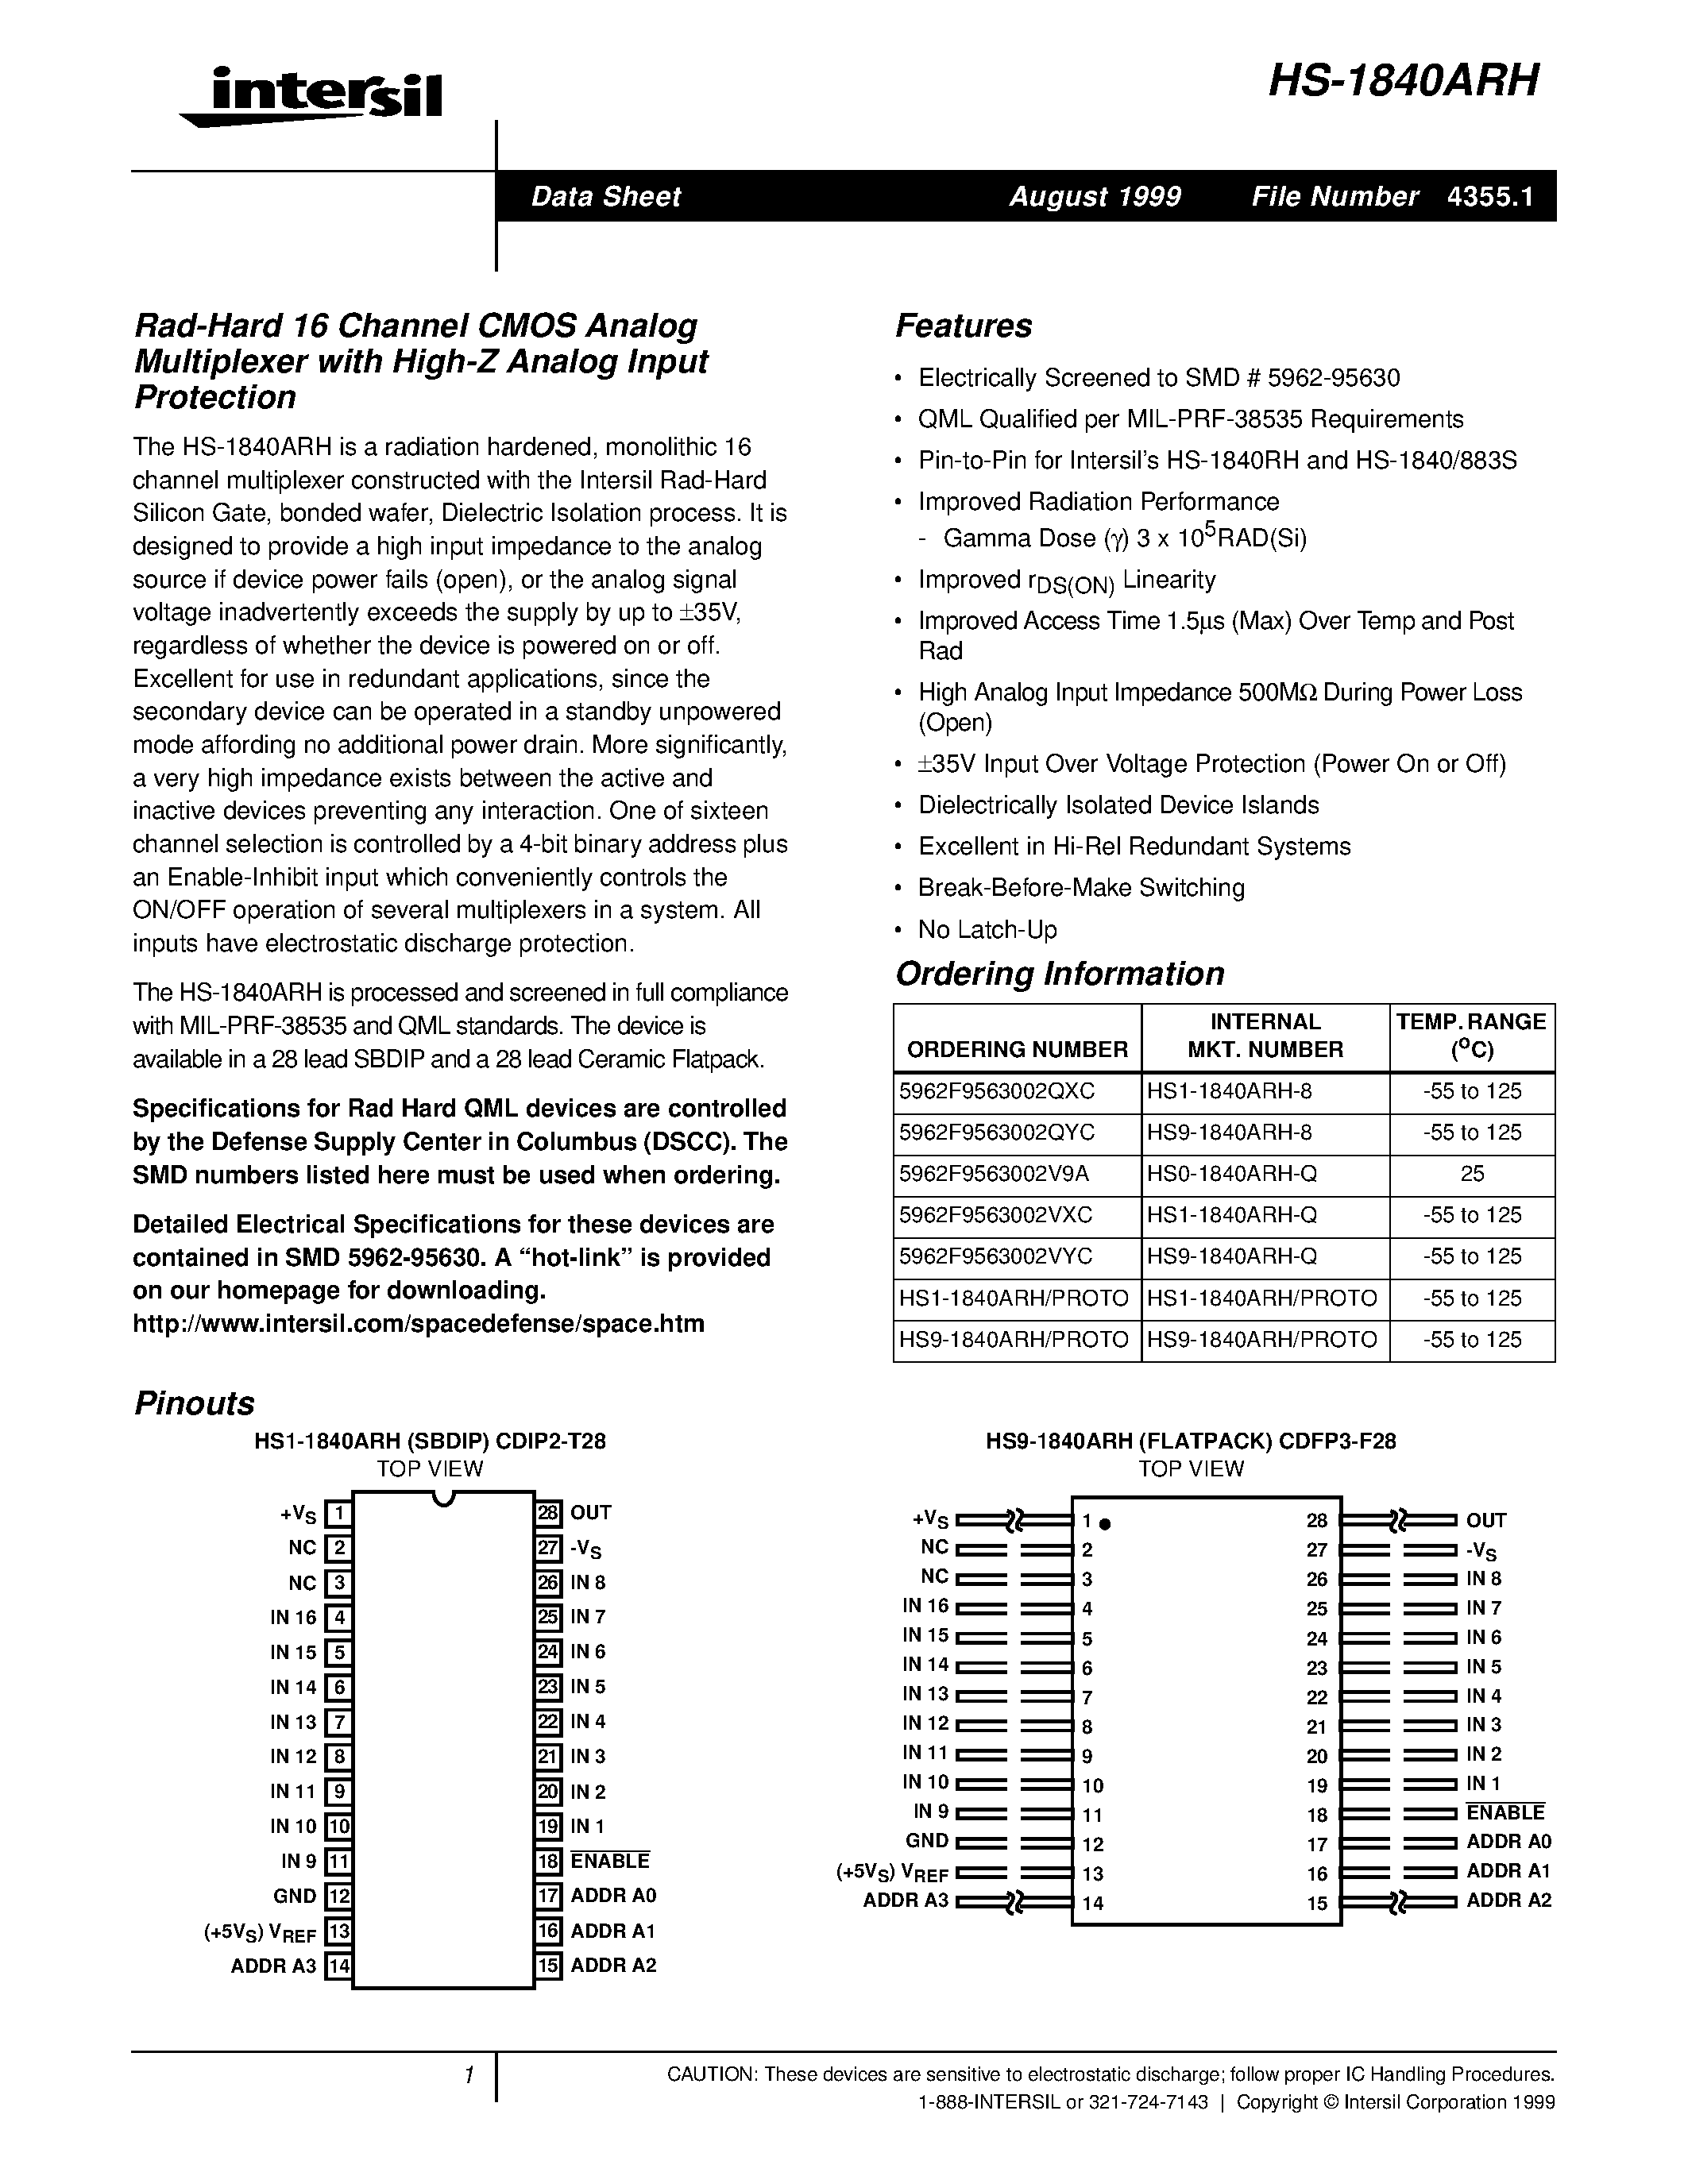 Даташит HS9-1840ARH-8 - Rad-Hard 16 Channel CMOS Analog Multiplexer with High-Z Analog Input Protection страница 1